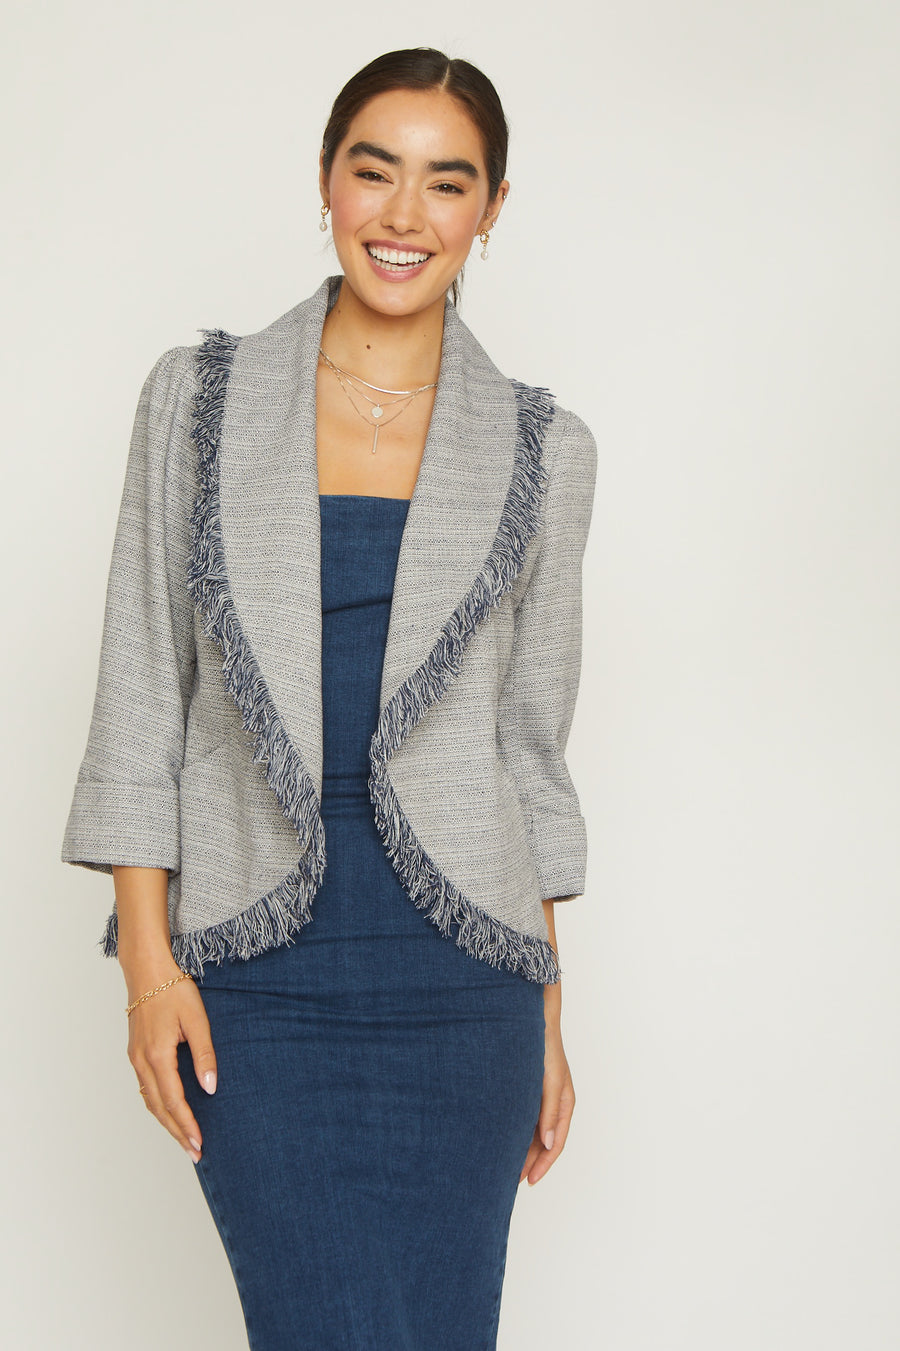 No Srcipt image - Images of 1 of 5 Shawl tweed jacket, fringe details, 3/4 sleeve. navy color, open front